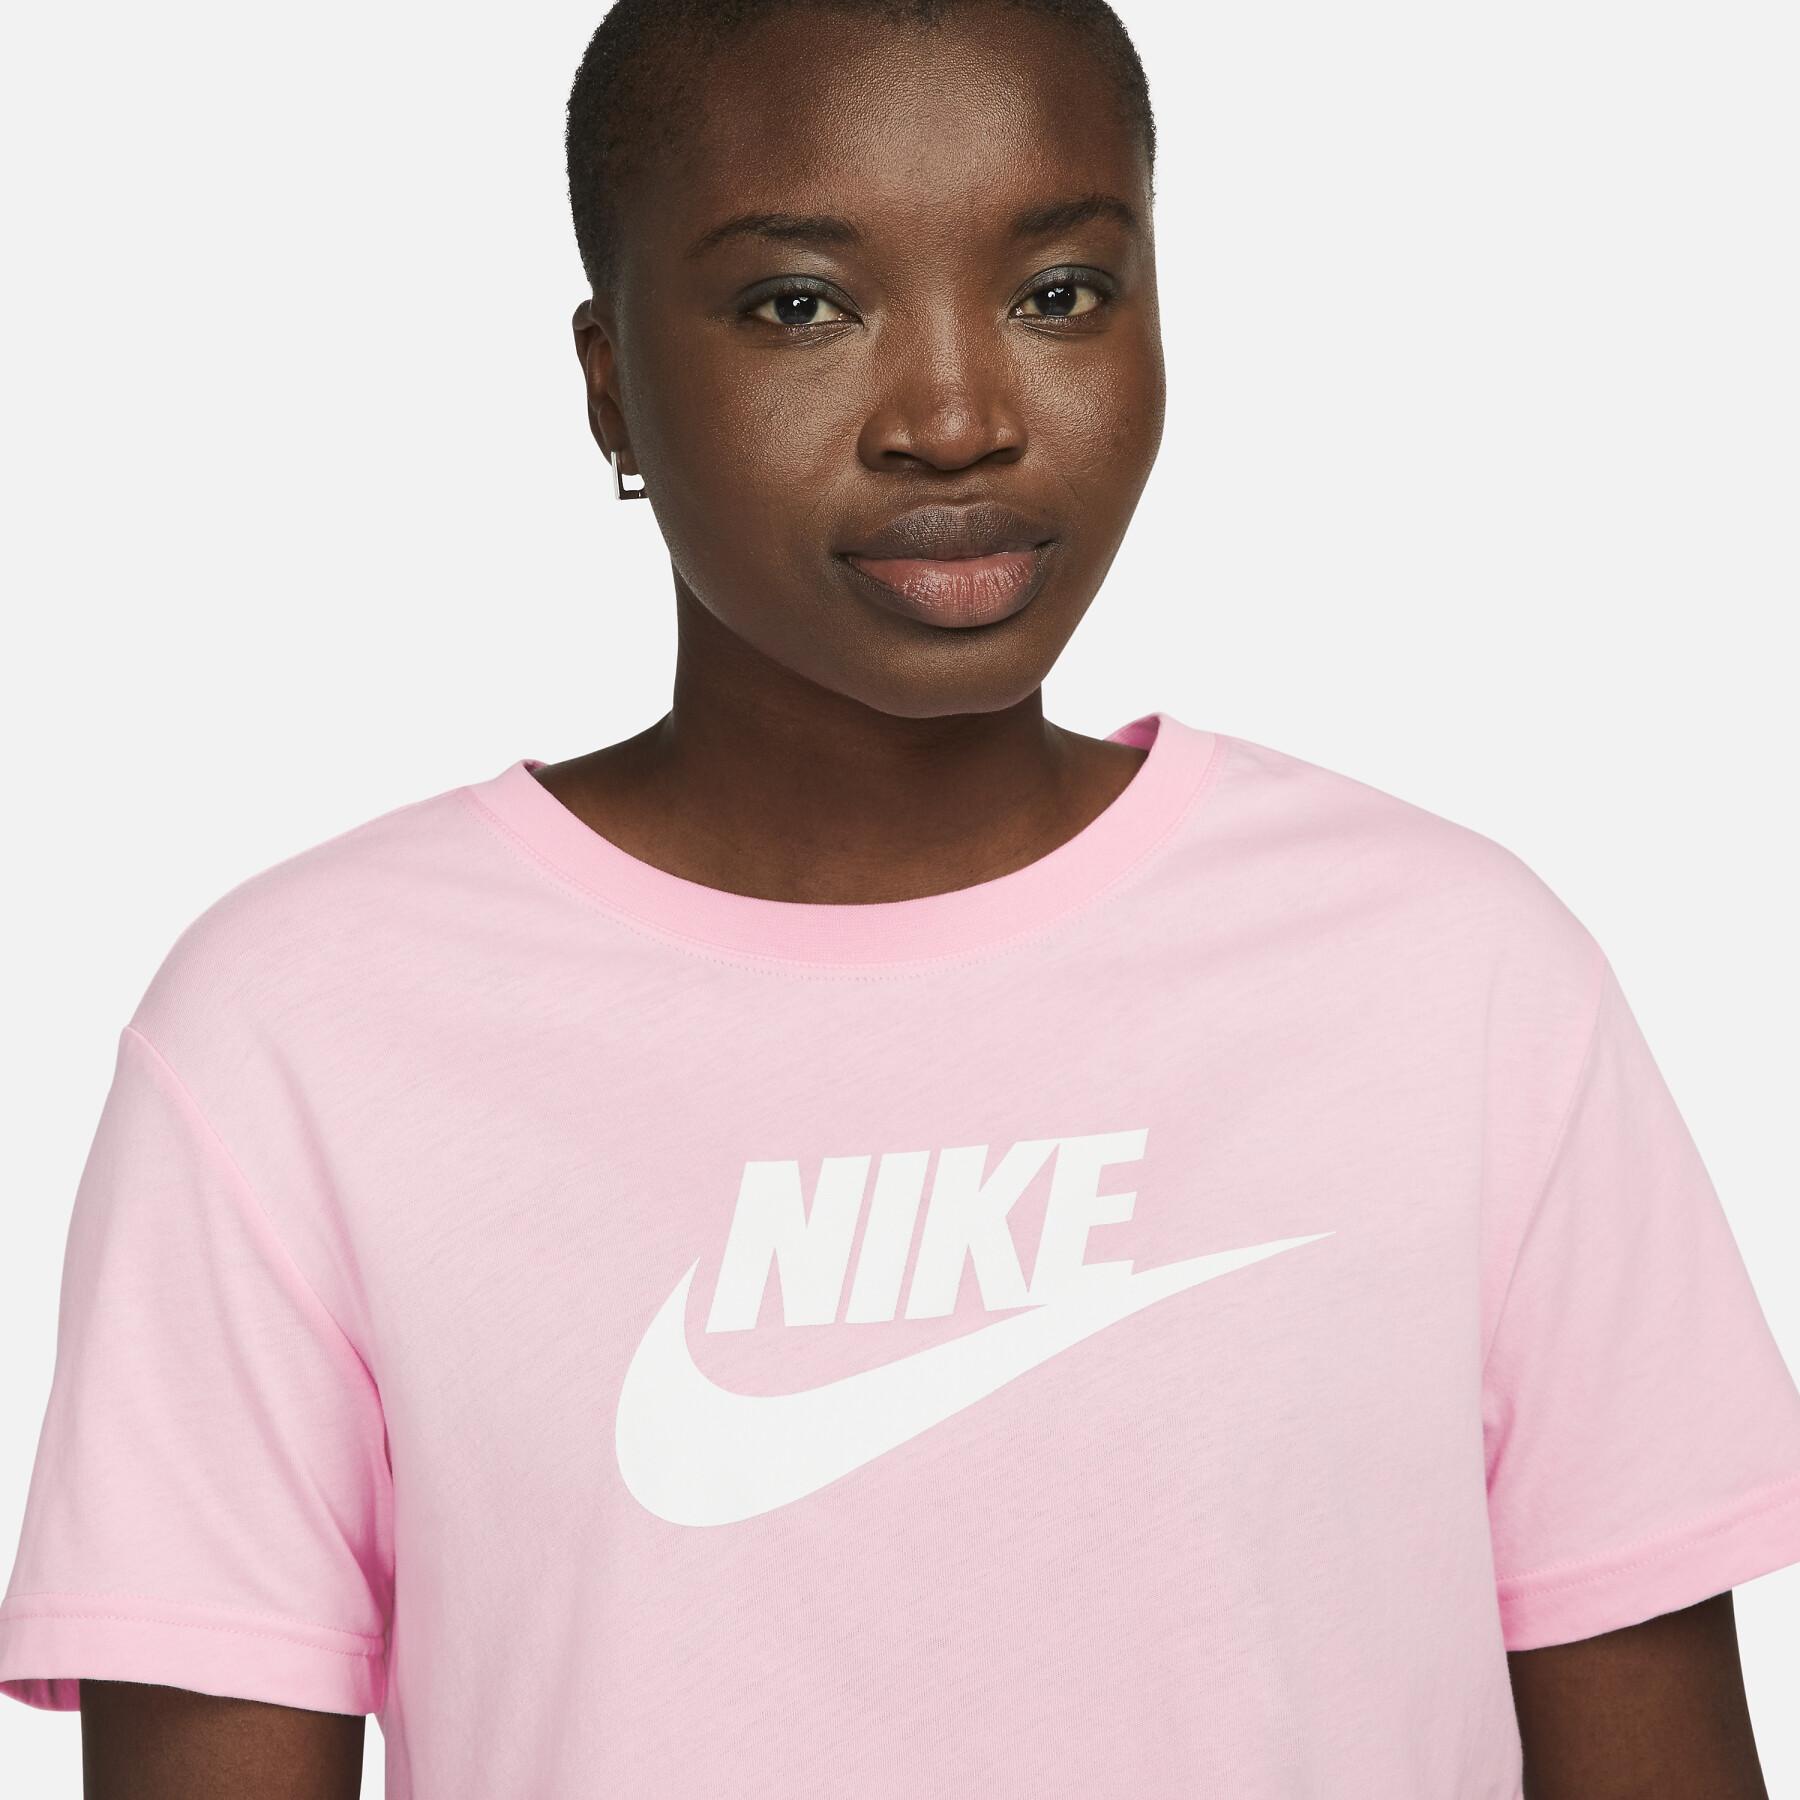 Women's T-shirt Nike Essentials